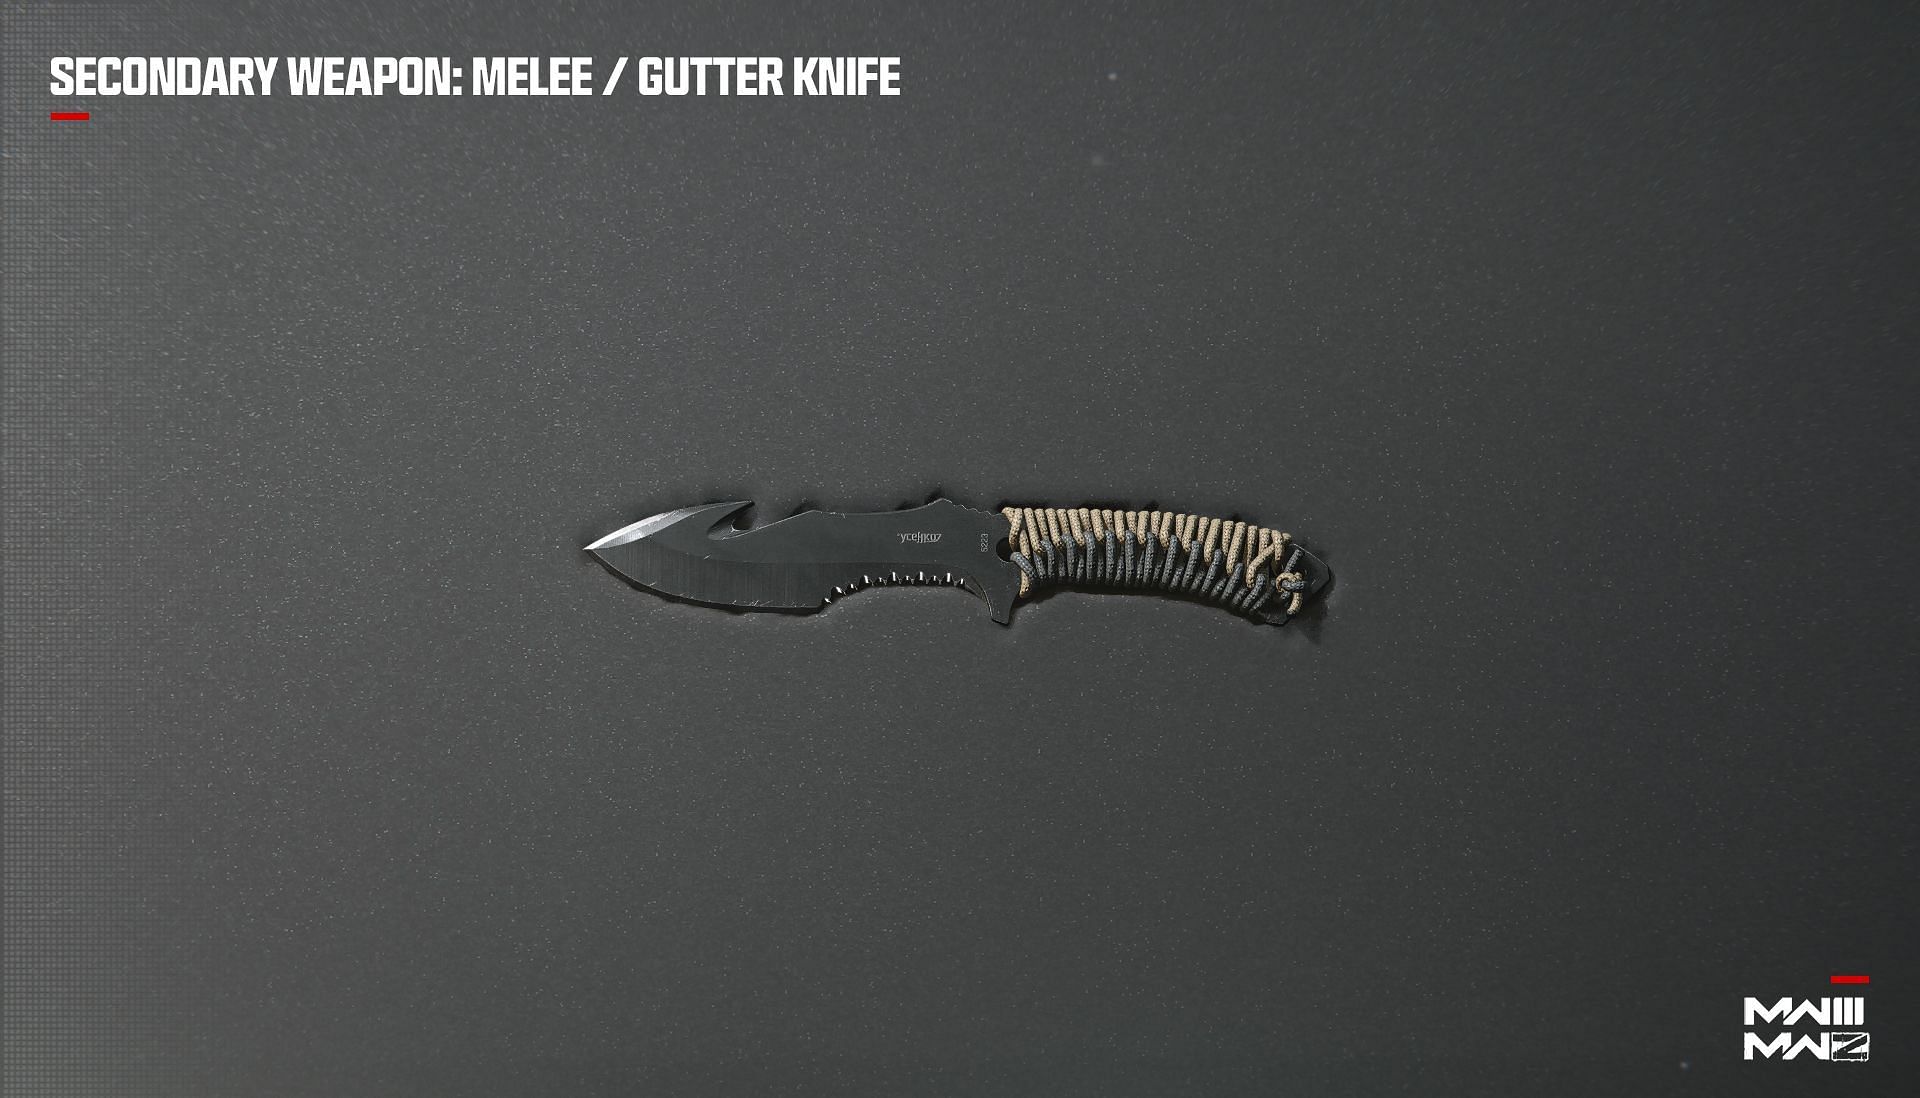 Gutter Knife melee weapon (Image via Activision)